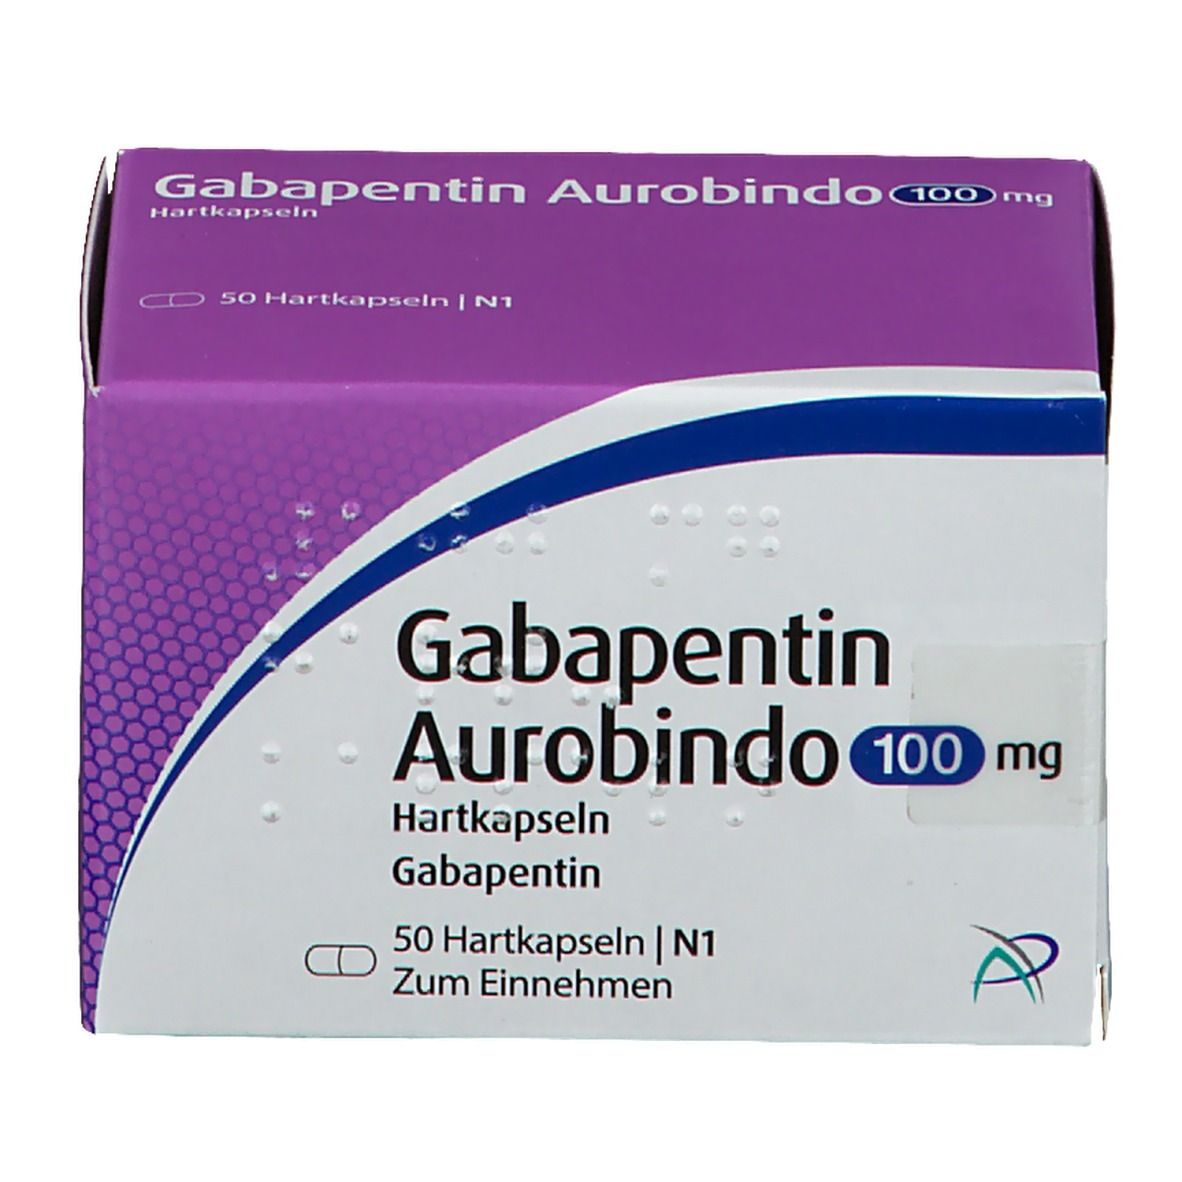 Gabapentin Aurobindo 100 mg